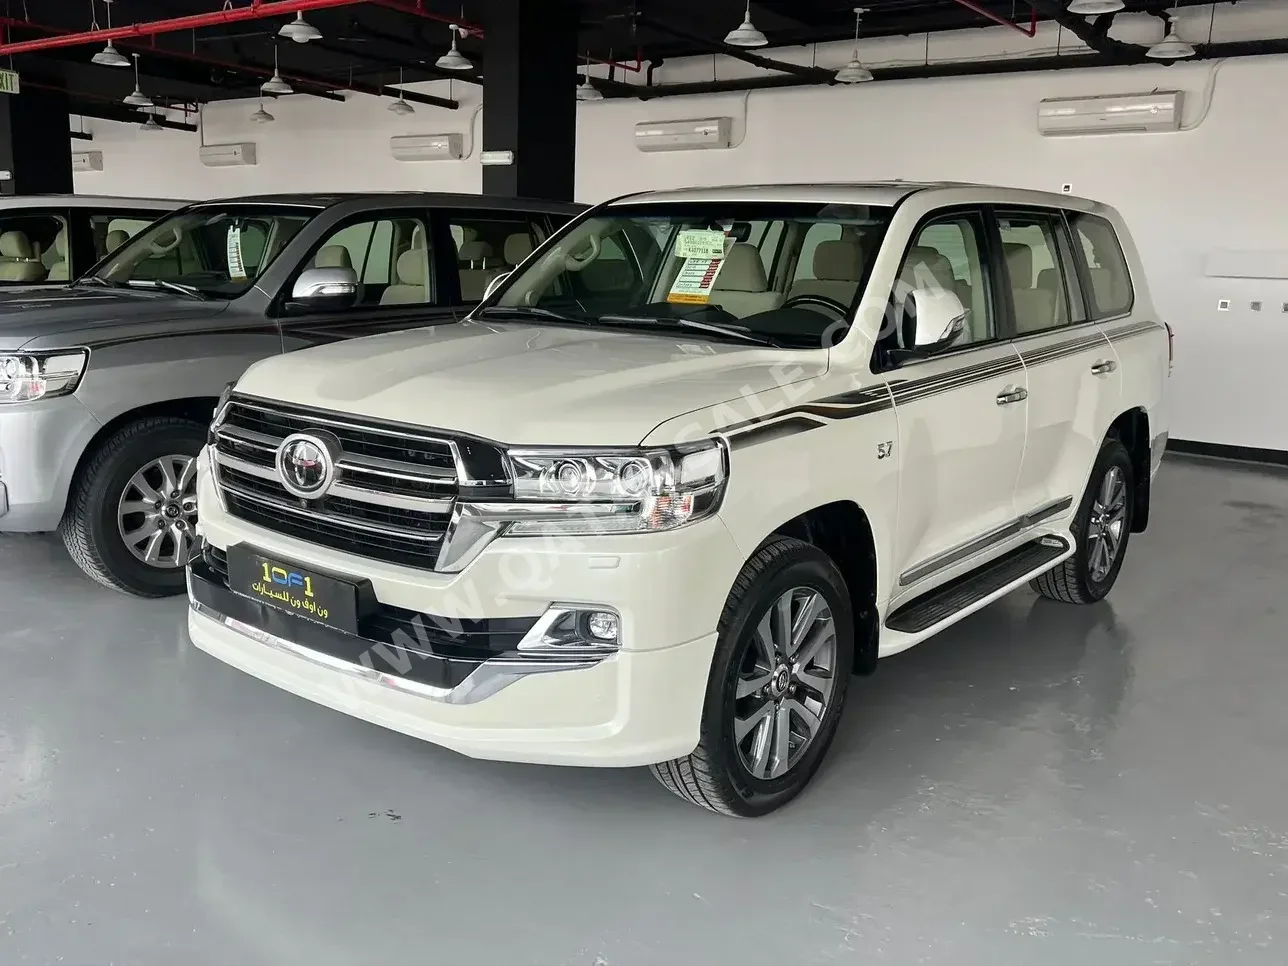 Toyota  Land Cruiser  VXR  2019  Automatic  70,000 Km  8 Cylinder  Four Wheel Drive (4WD)  SUV  White